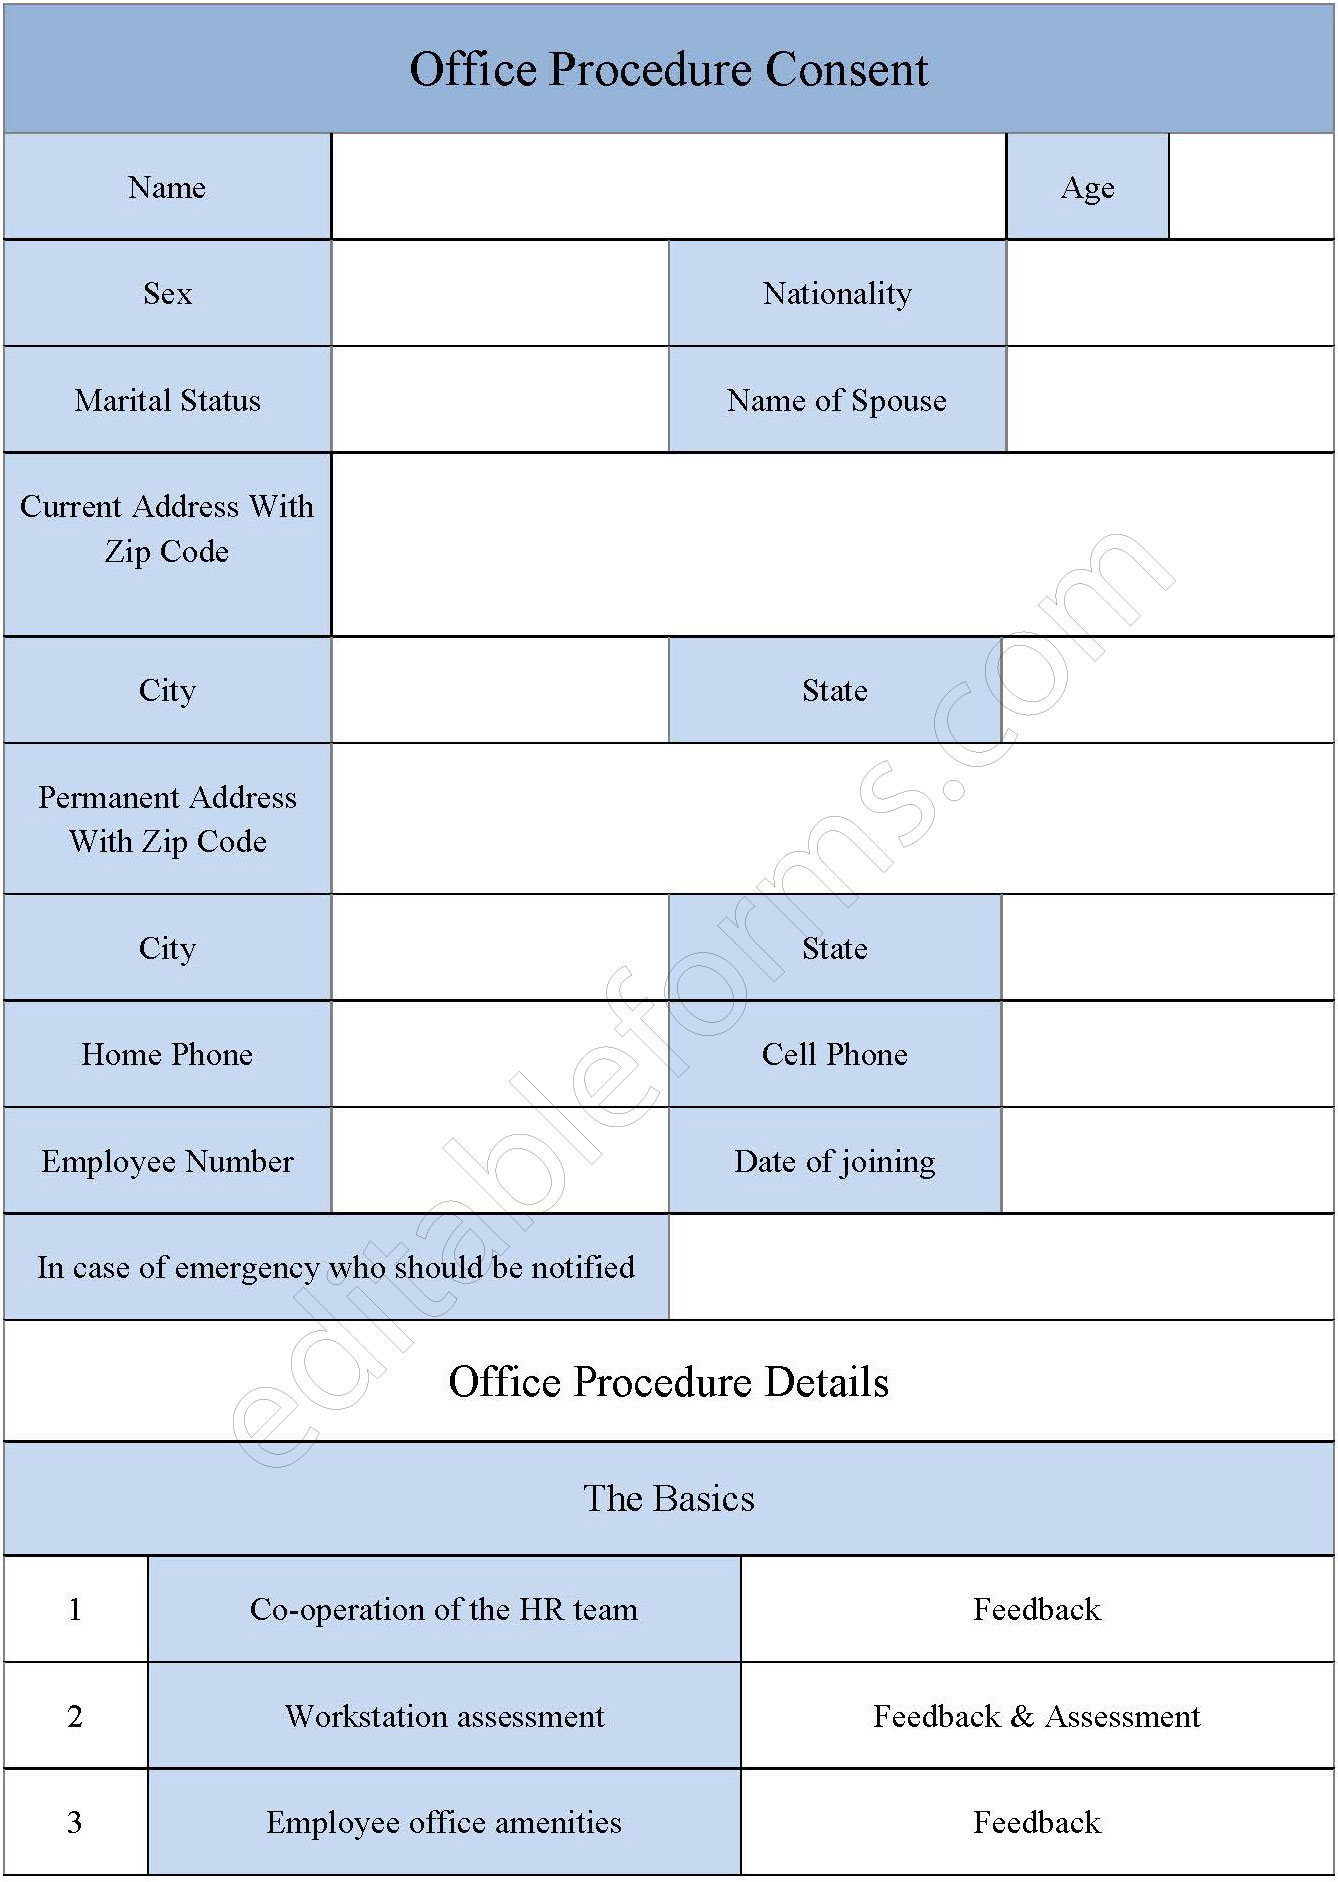 Office Procedure Consent Form